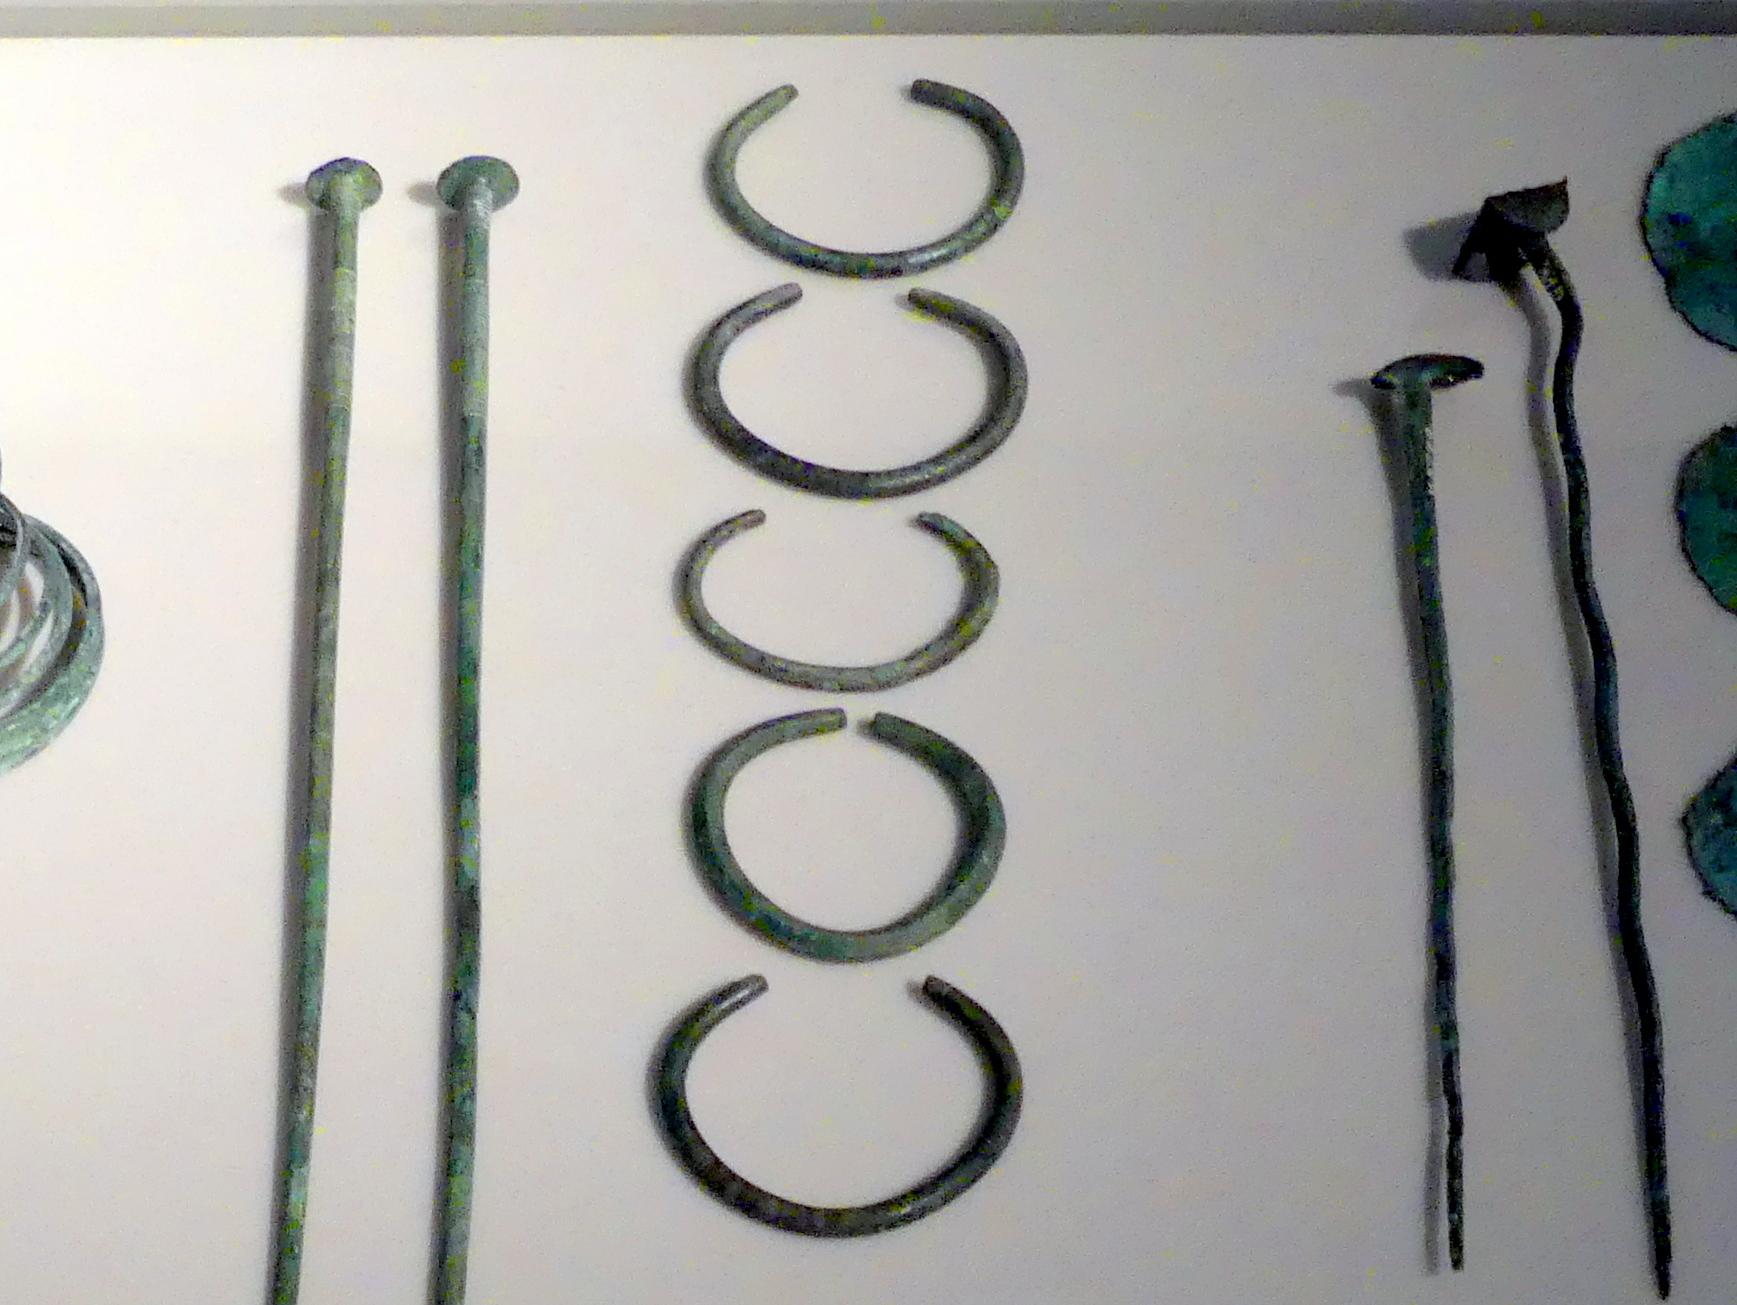 Armbänder, Mittlere Bronzezeit, 3000 - 1300 v. Chr., 1600 - 1300 v. Chr.